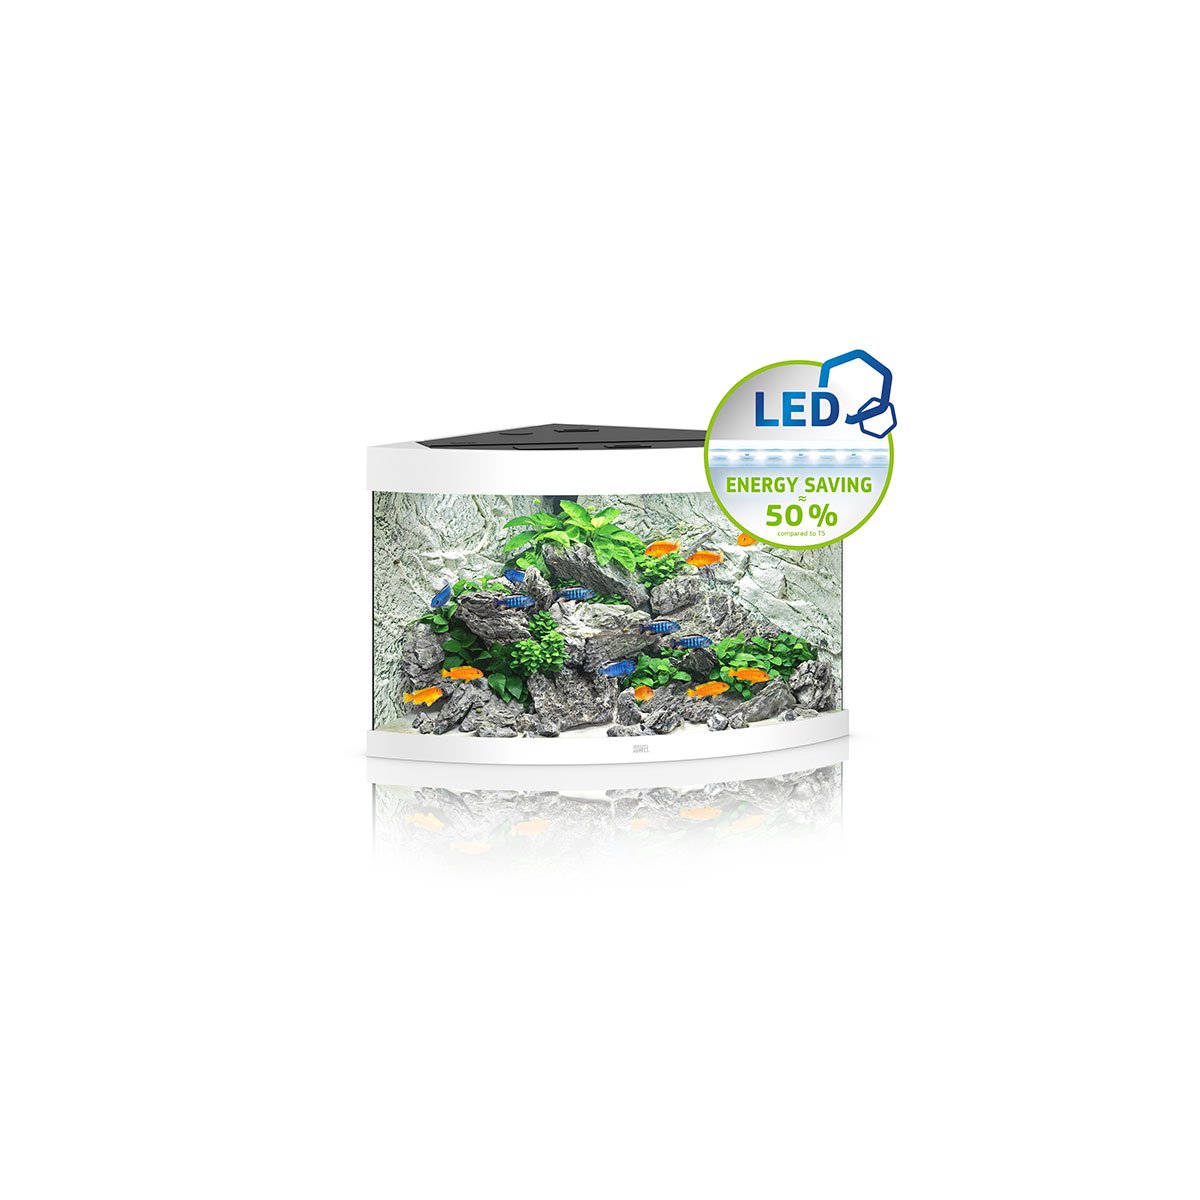 Juwel Komplett Eck-Aquarium Trigon 190 LED ohne Unterschrank weiß